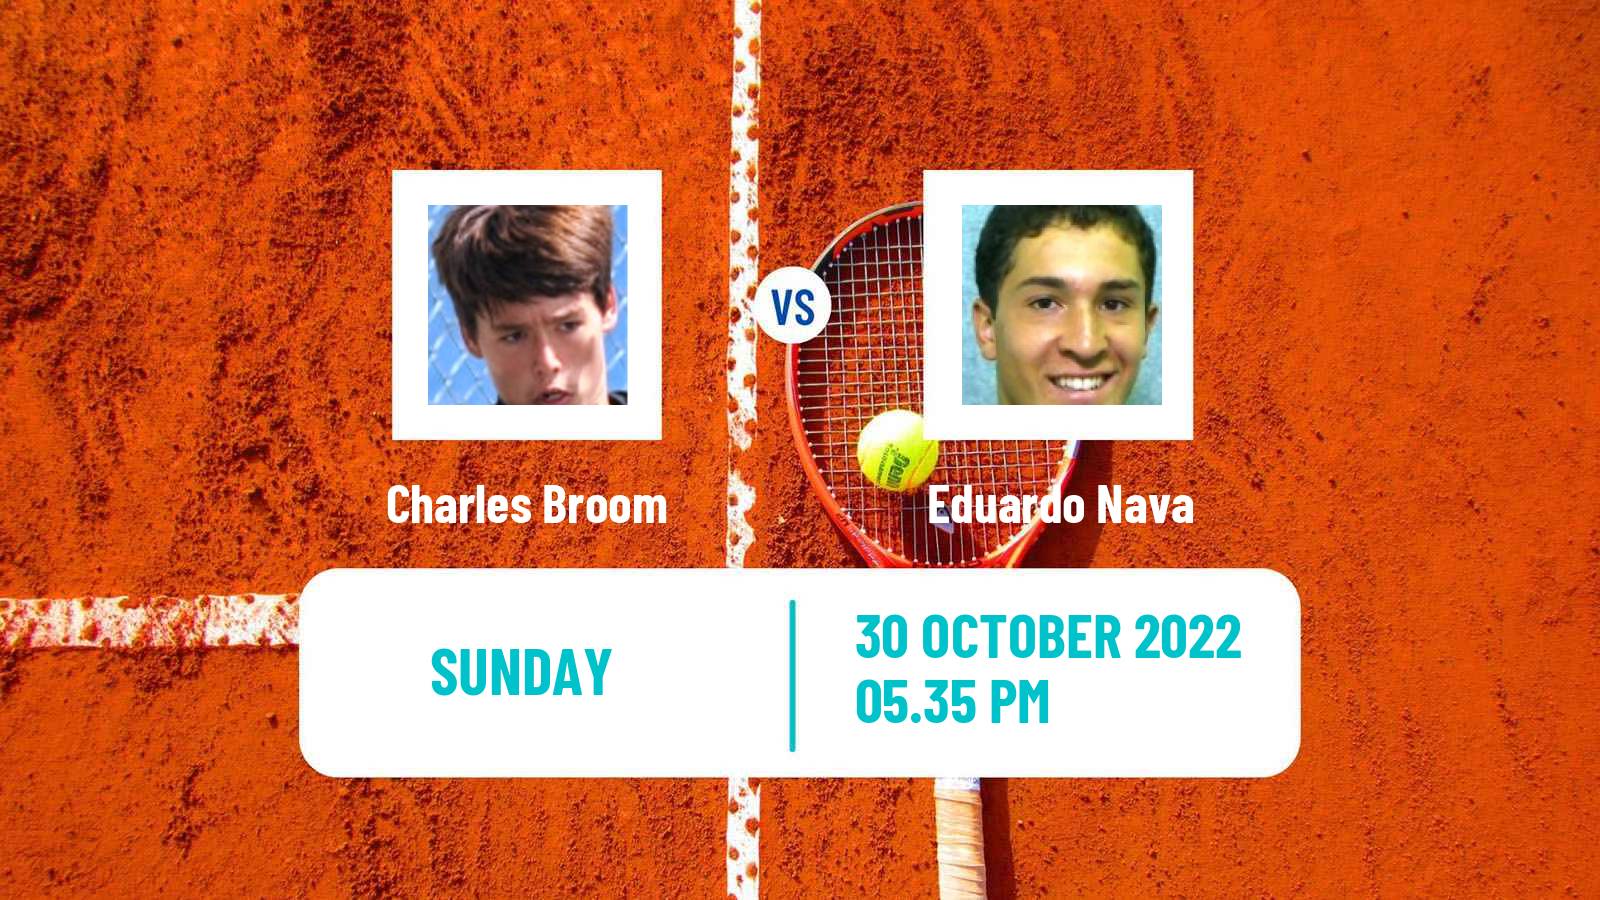 Tennis ATP Challenger Charles Broom - Eduardo Nava